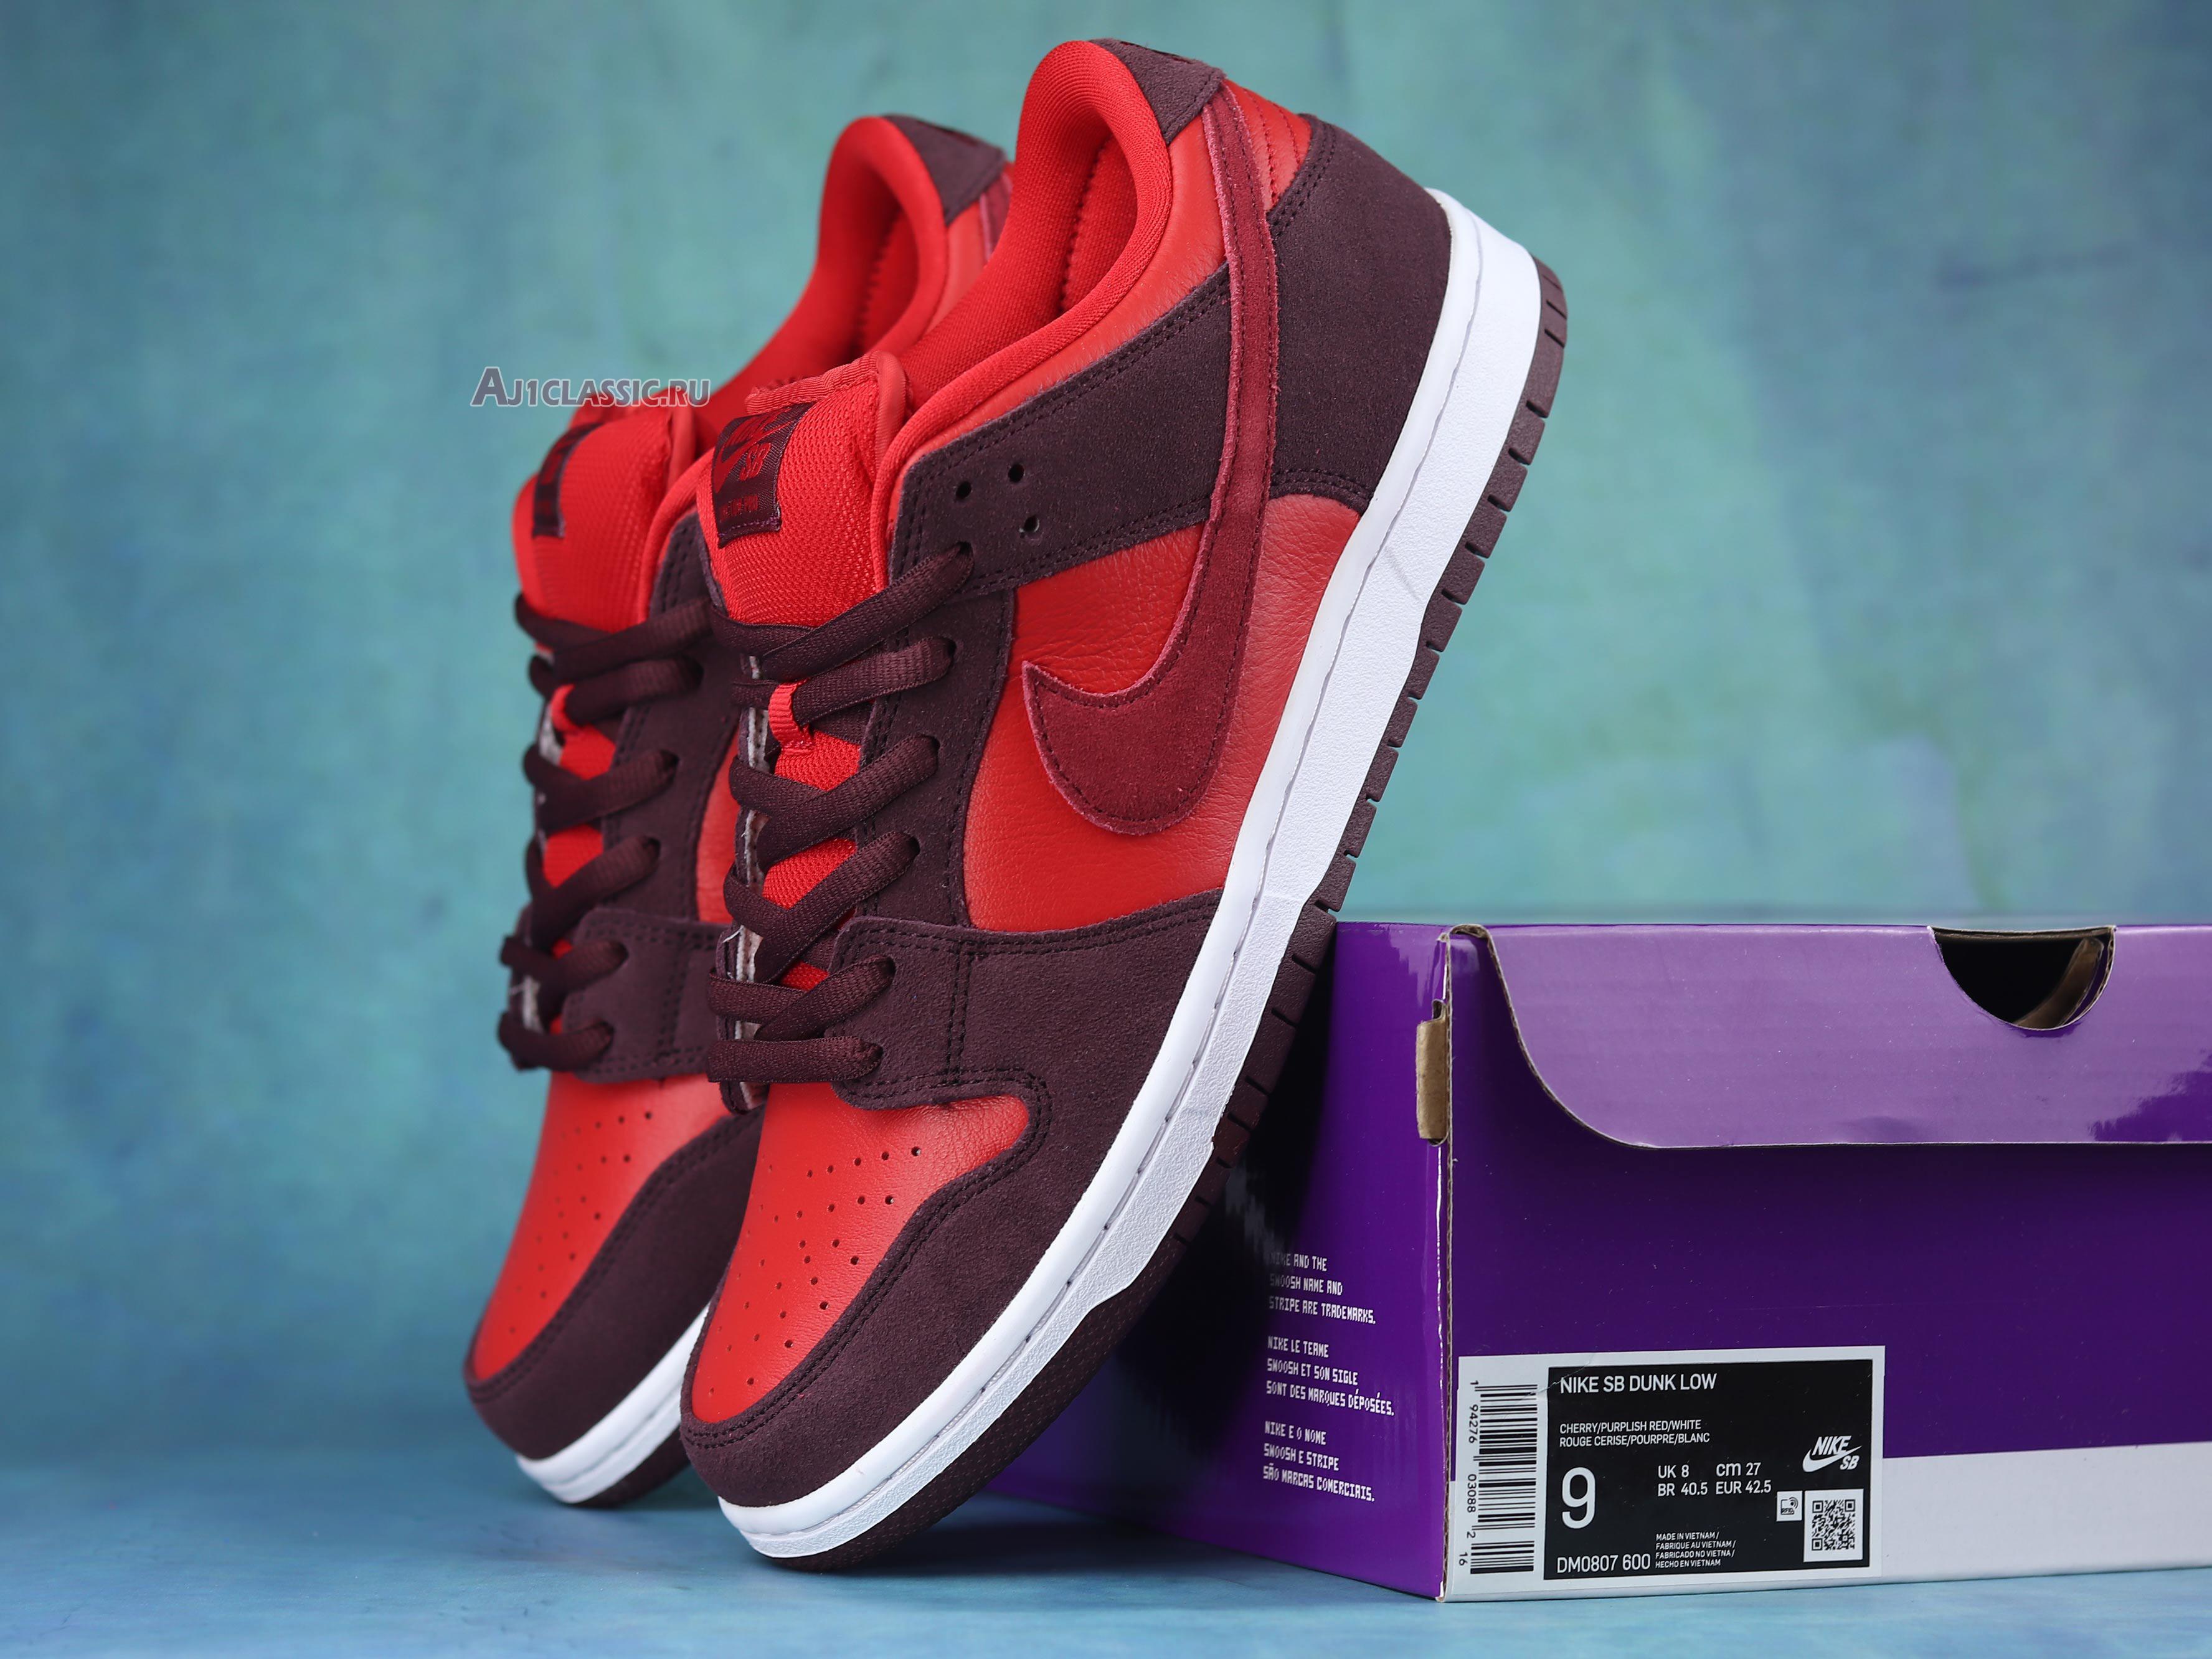 Nike Dunk Low Pro SB Fruity Pack - Cherry DM0807-600 Burgundy Crush/Team Red Sneakers